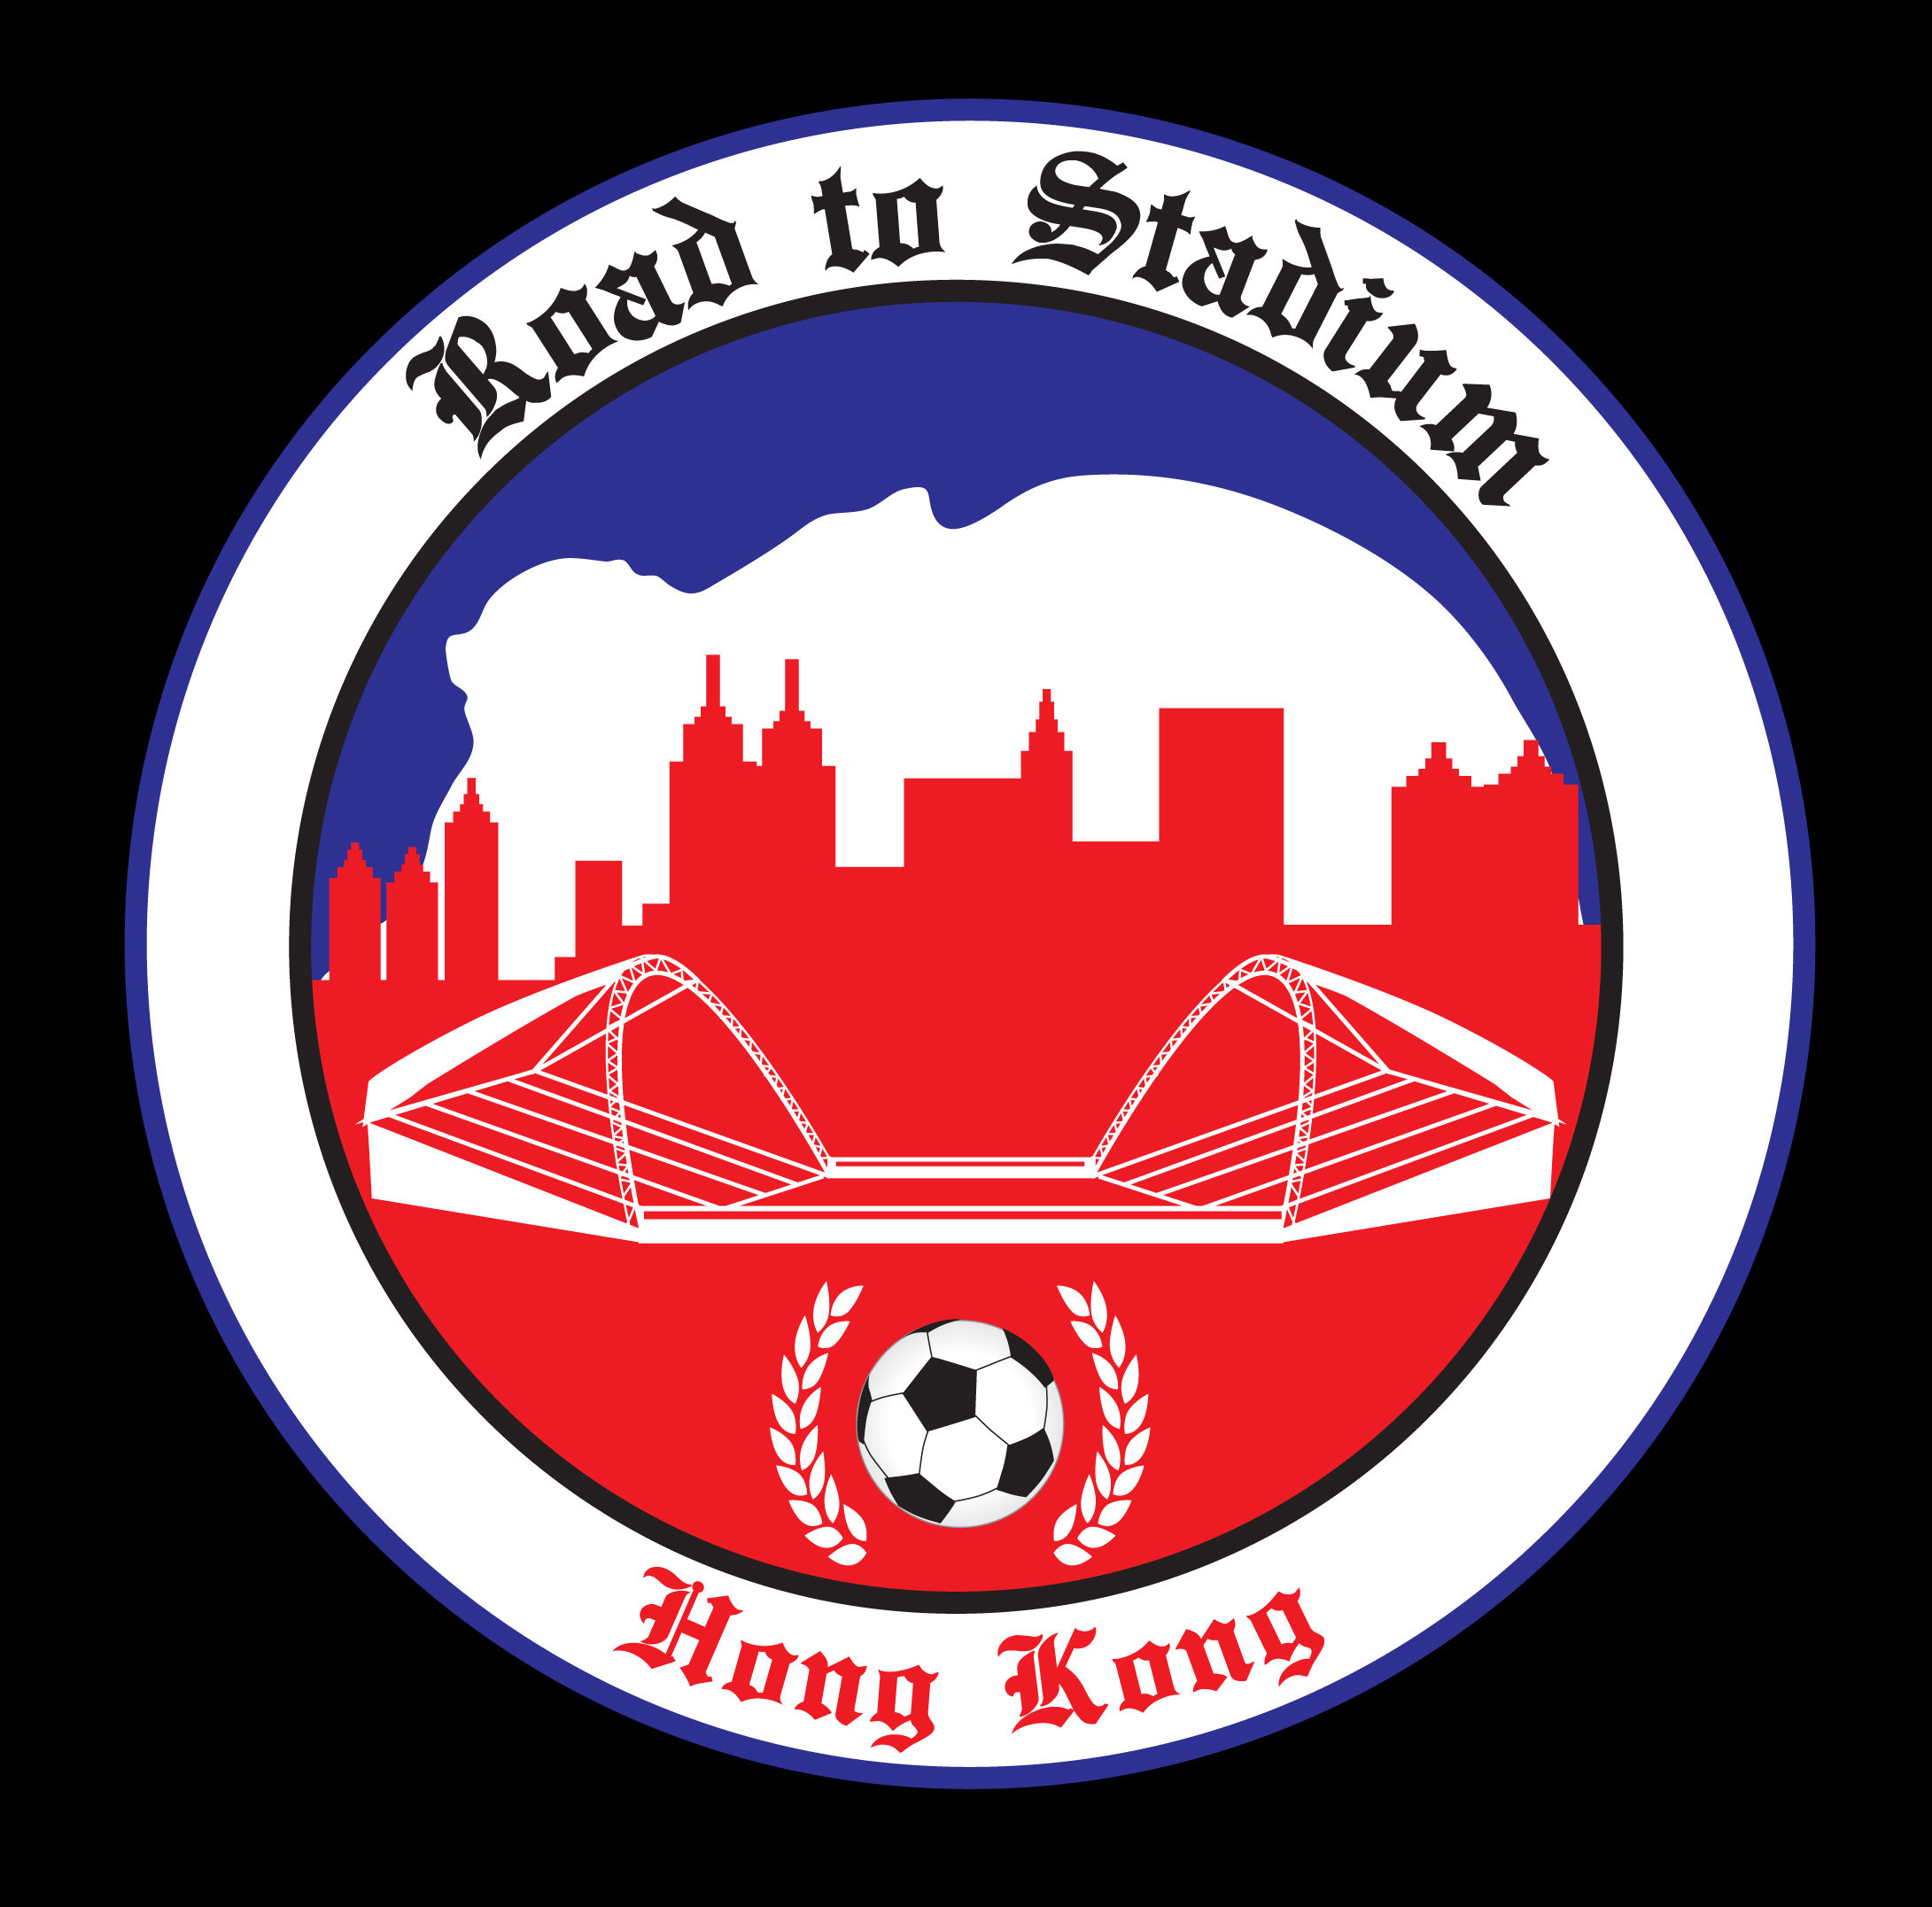 SL_LO_0024_V1-2 road to stadium logo.jpg